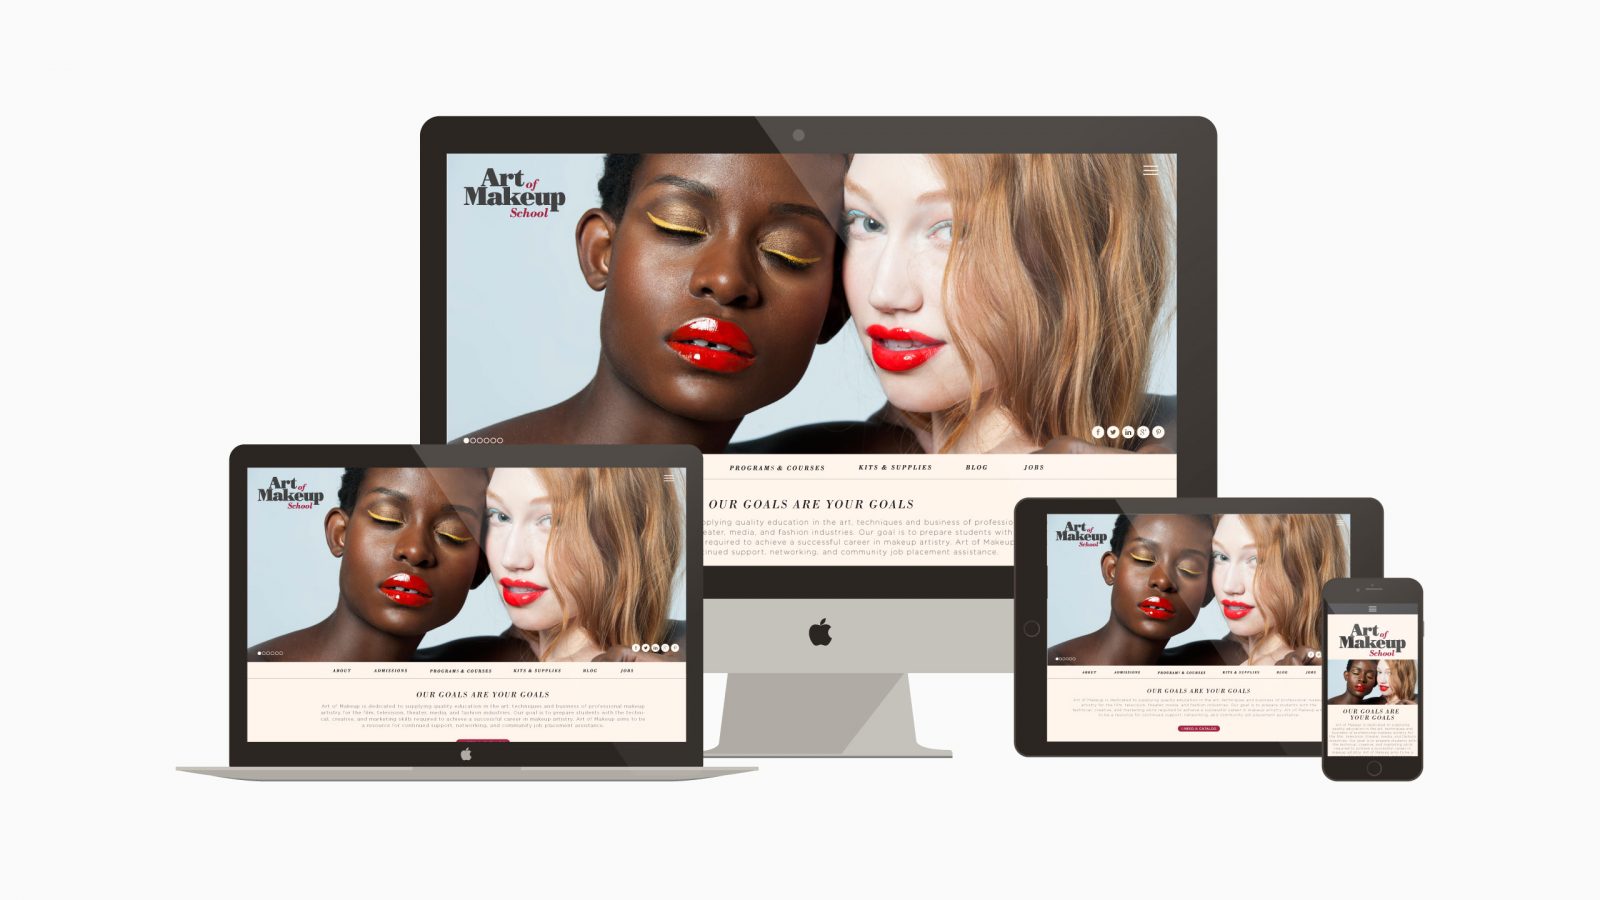 Art of Makeup Website Design by Murmur Creative